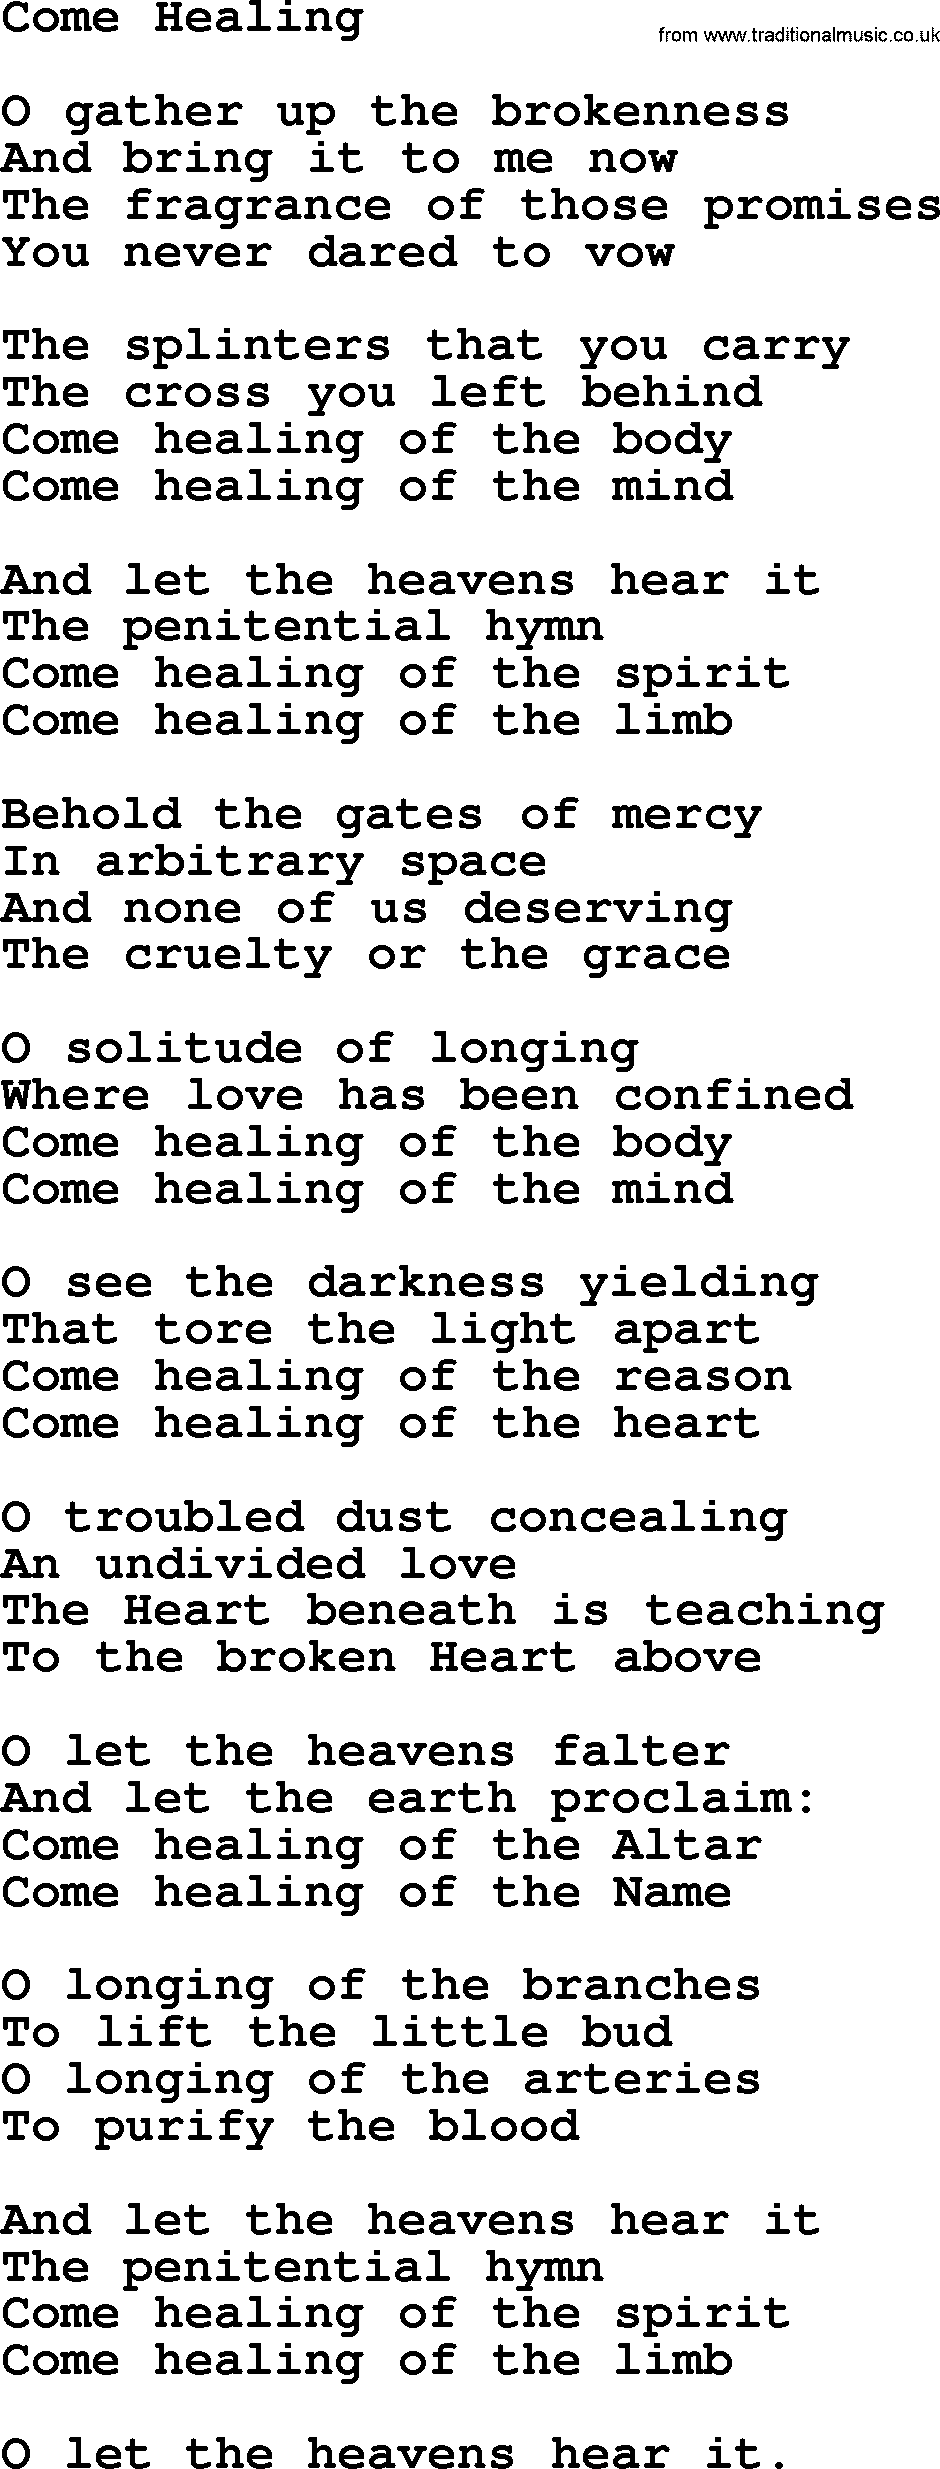 Leonard Cohen song Come Healing-leonard-cohen.txt lyrics